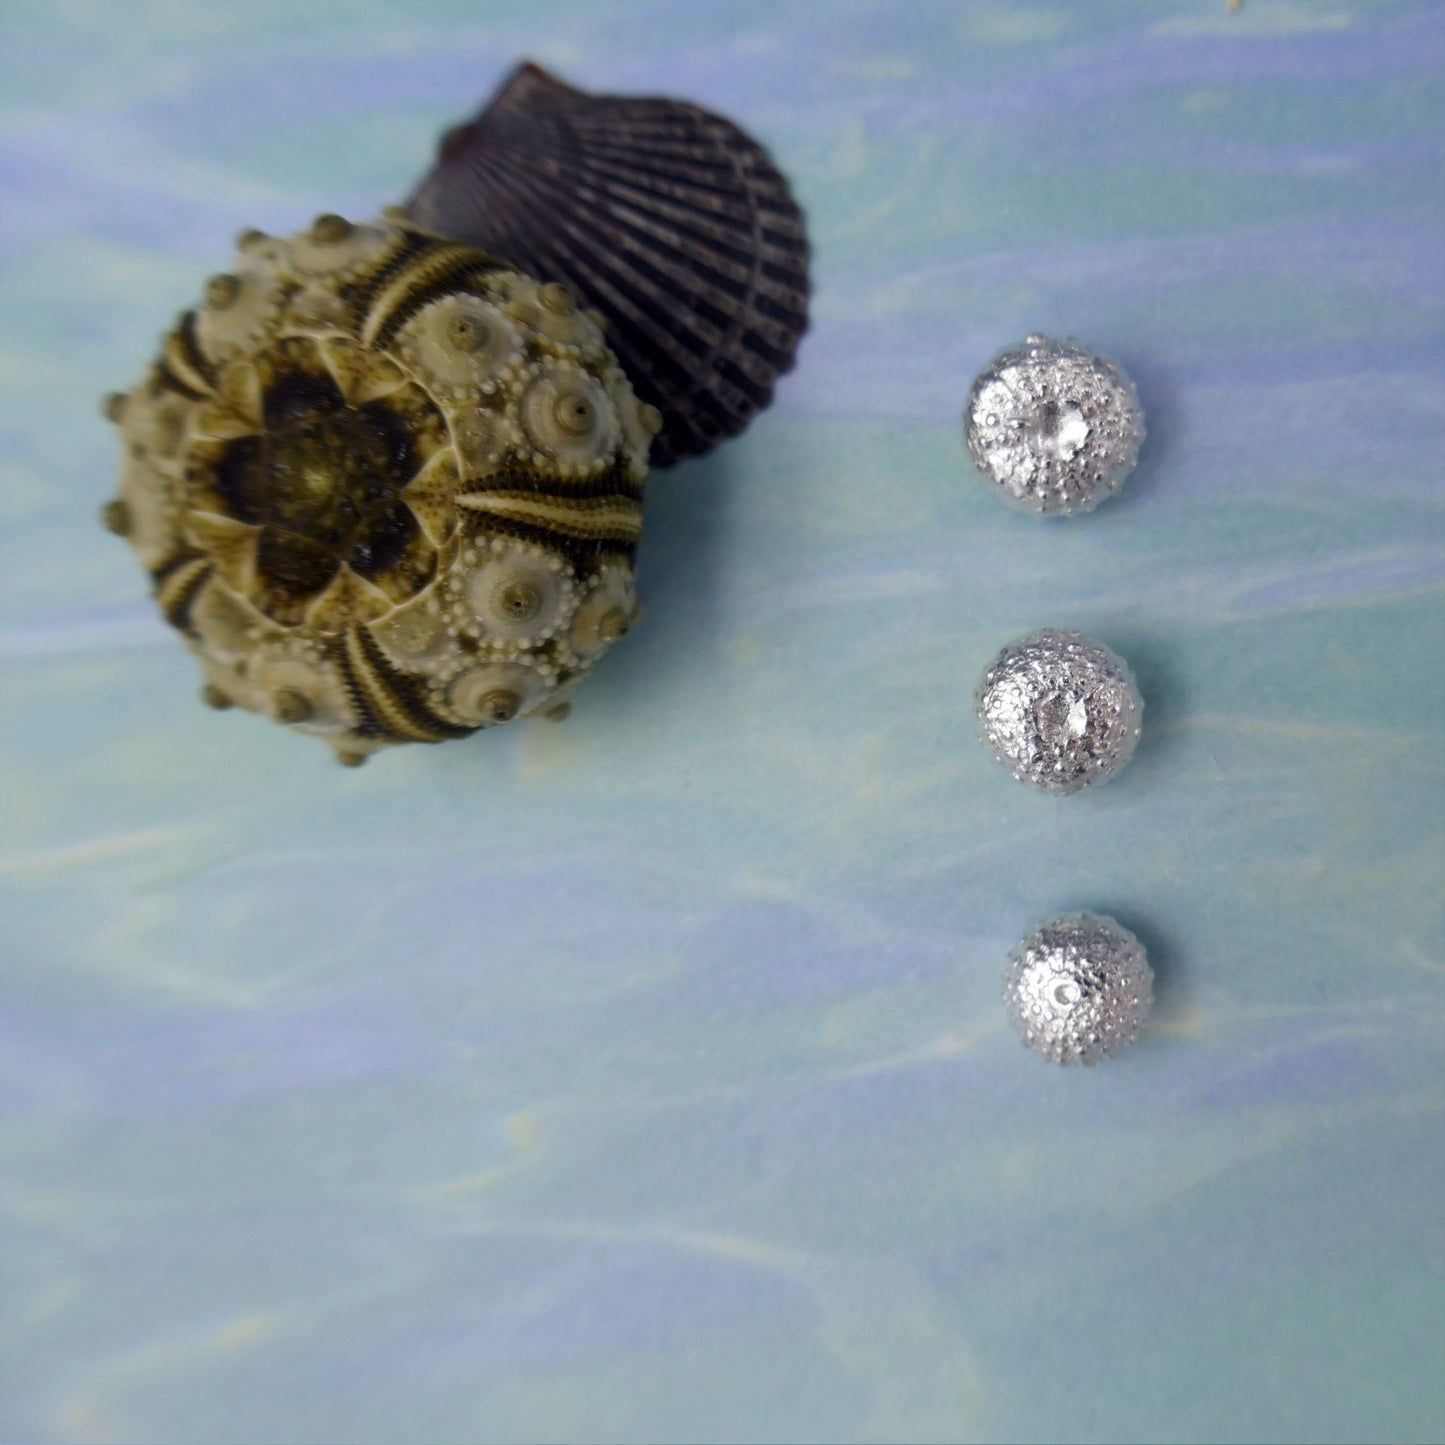 Sea Urchin Mini's in 2 sizes